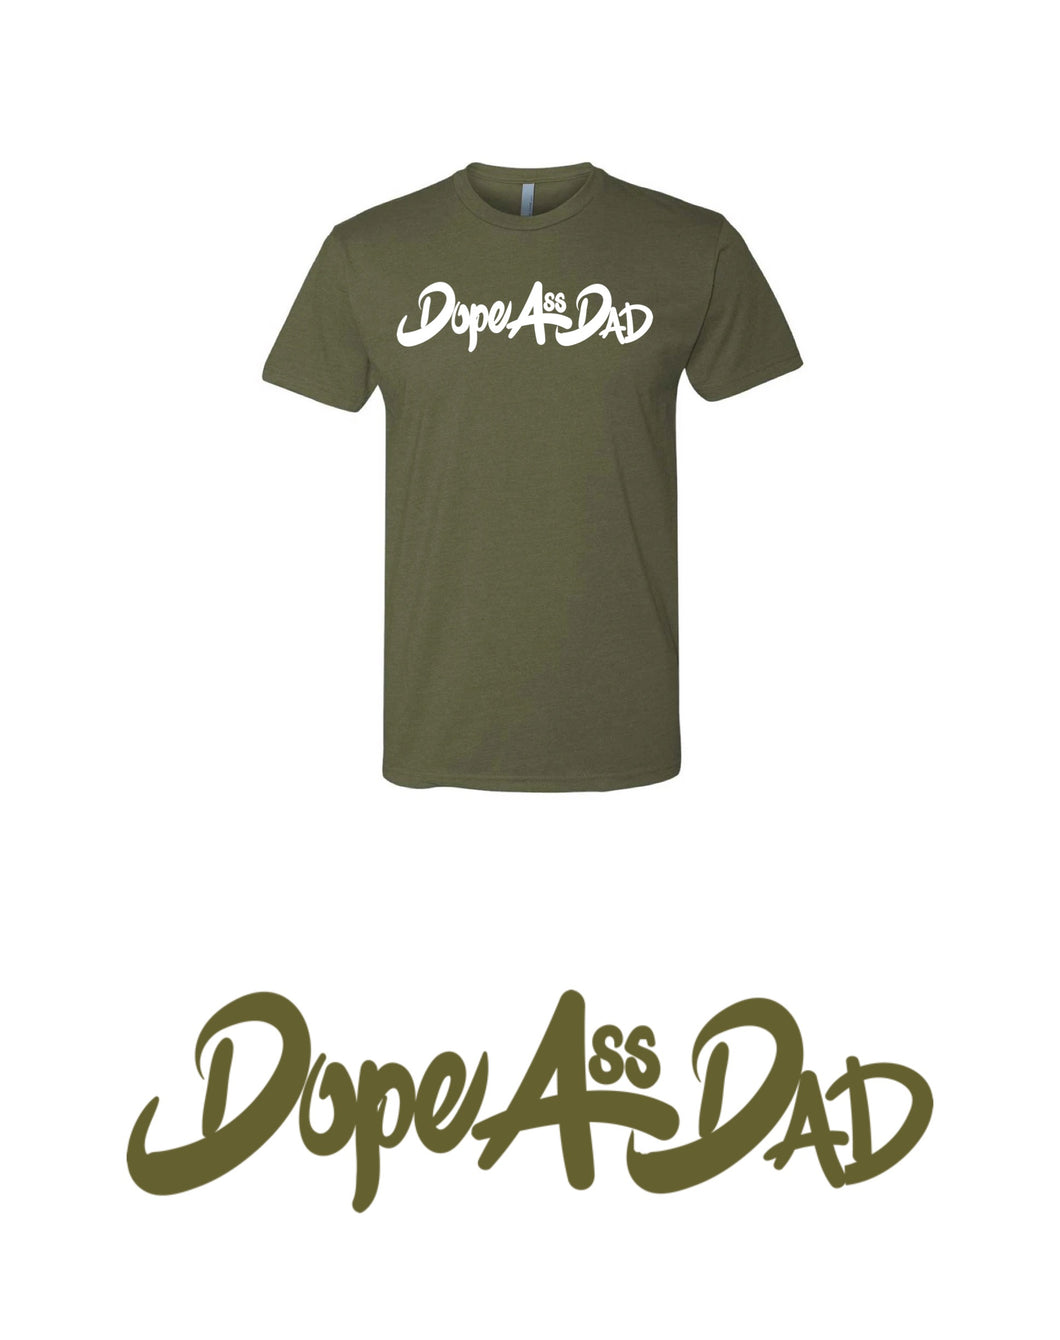 The Basic Dad Shirt (Military Green/White)